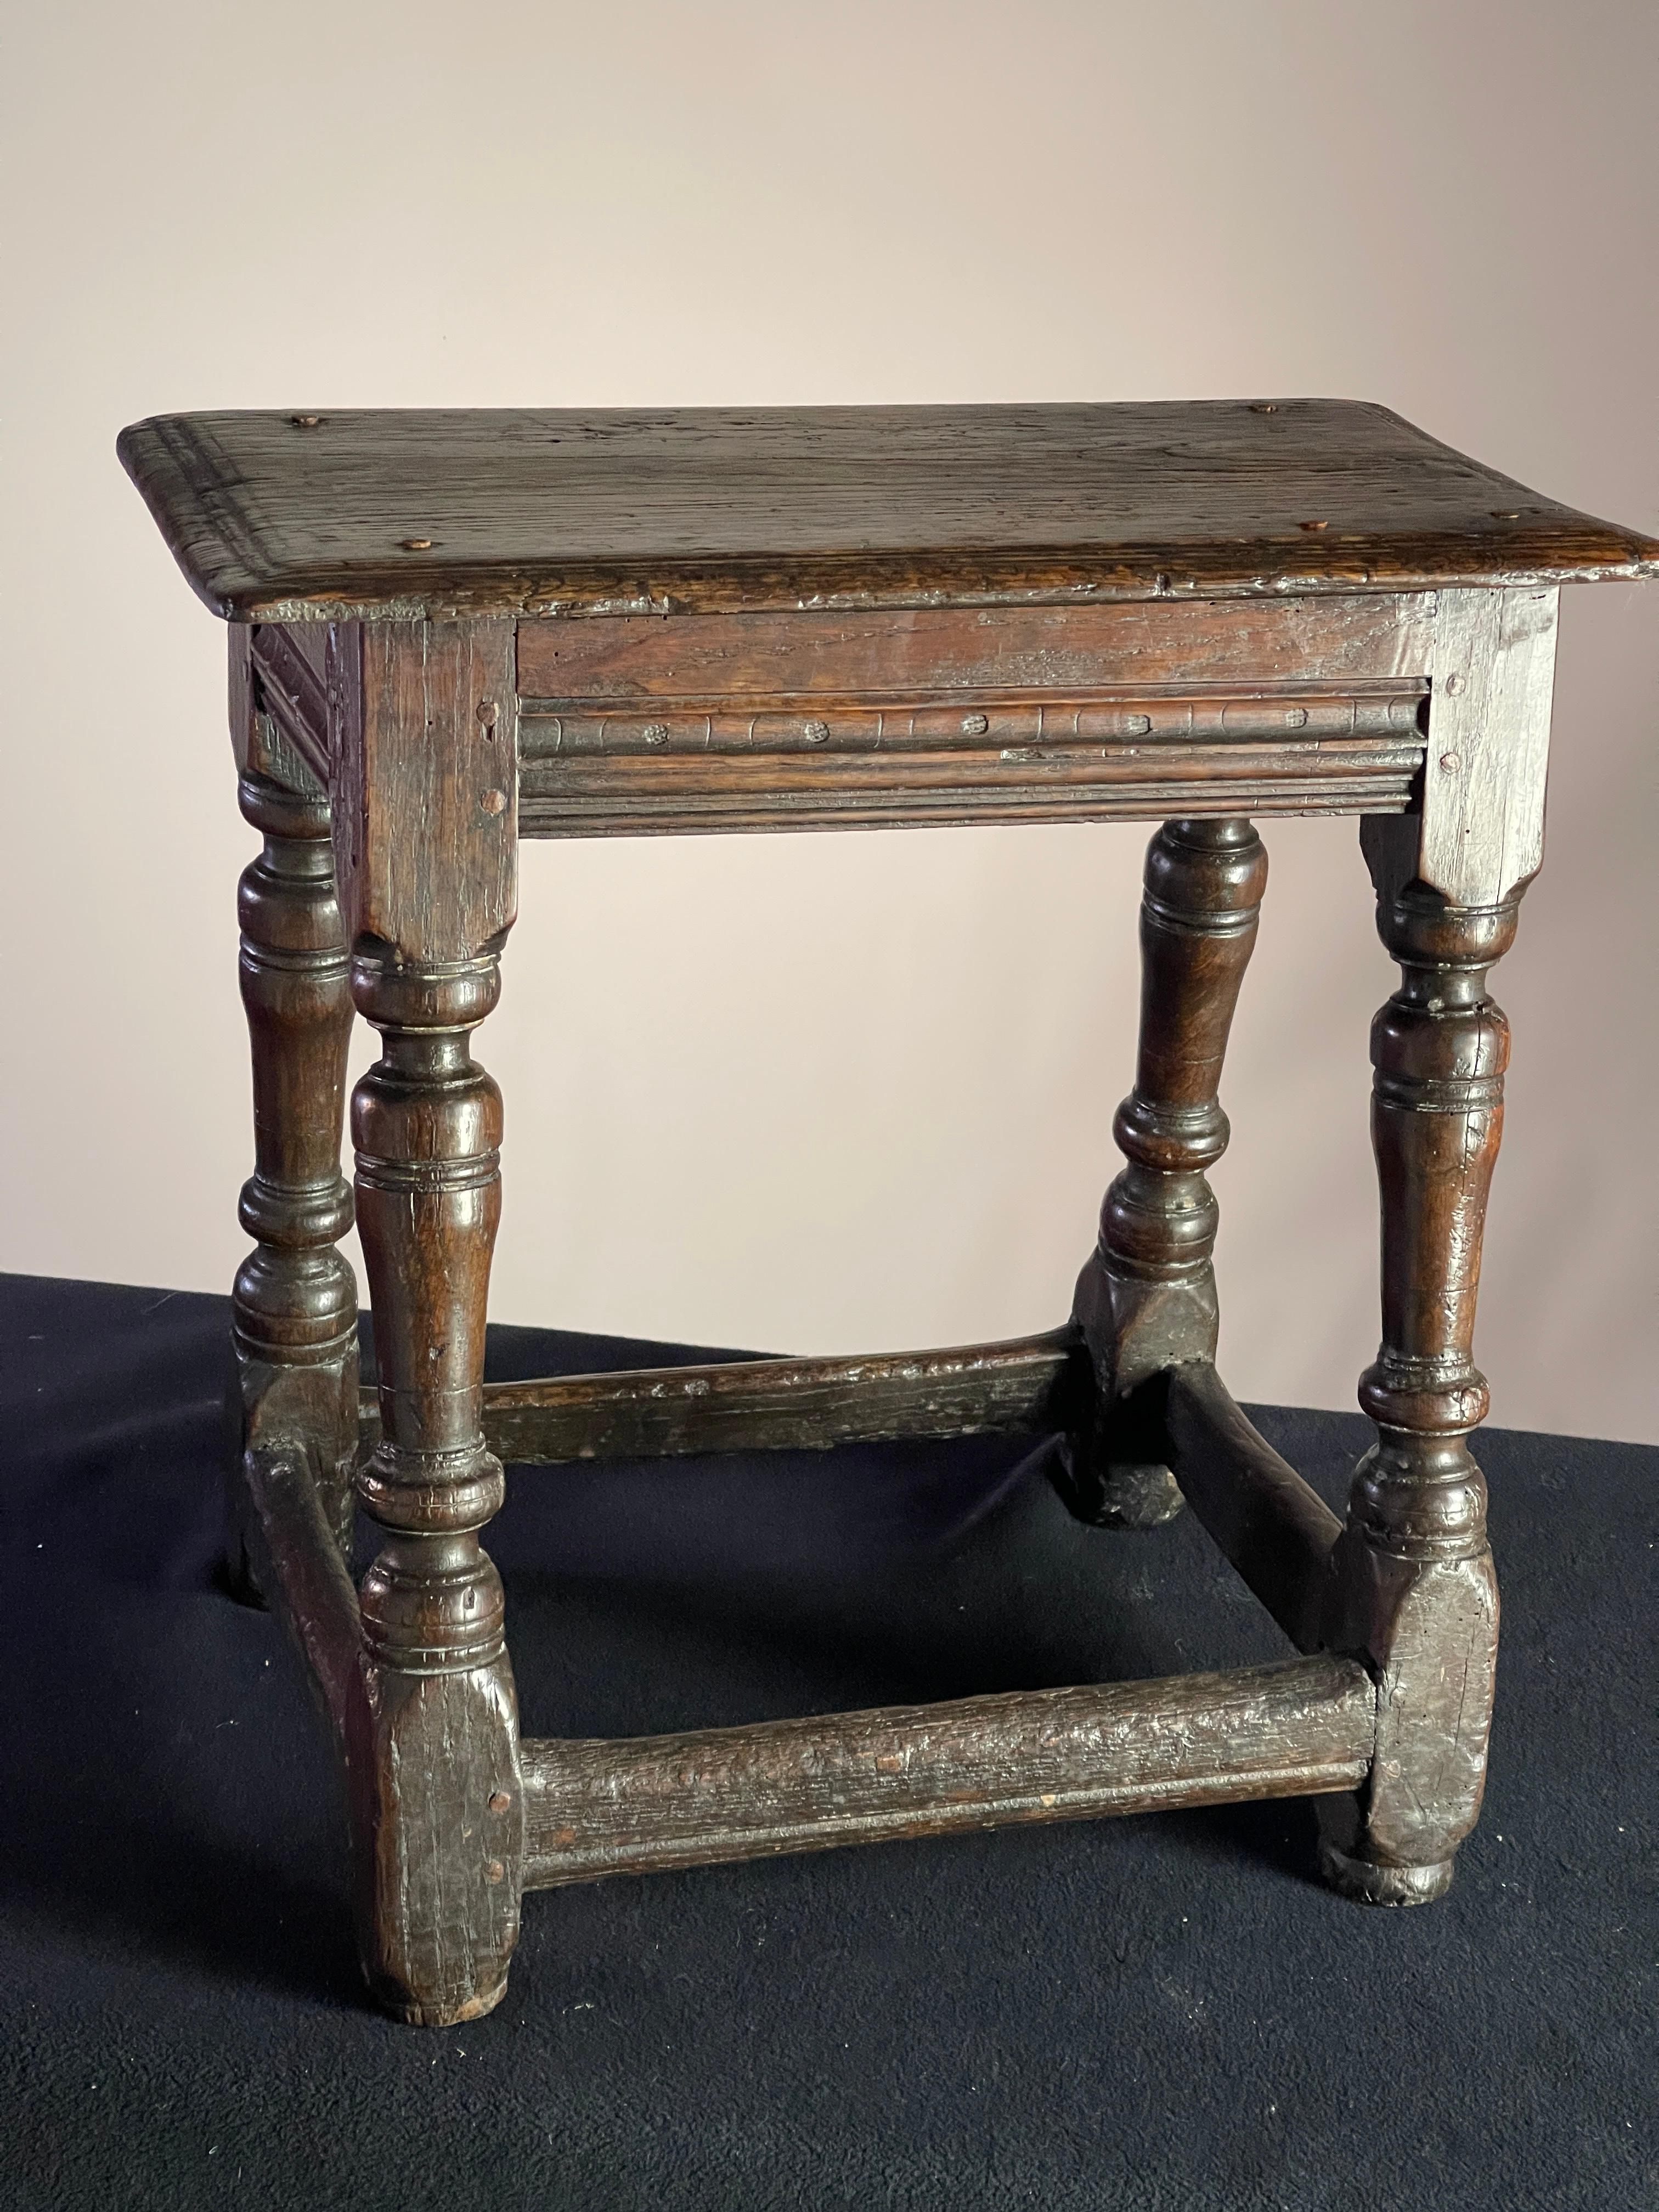 17th century stool